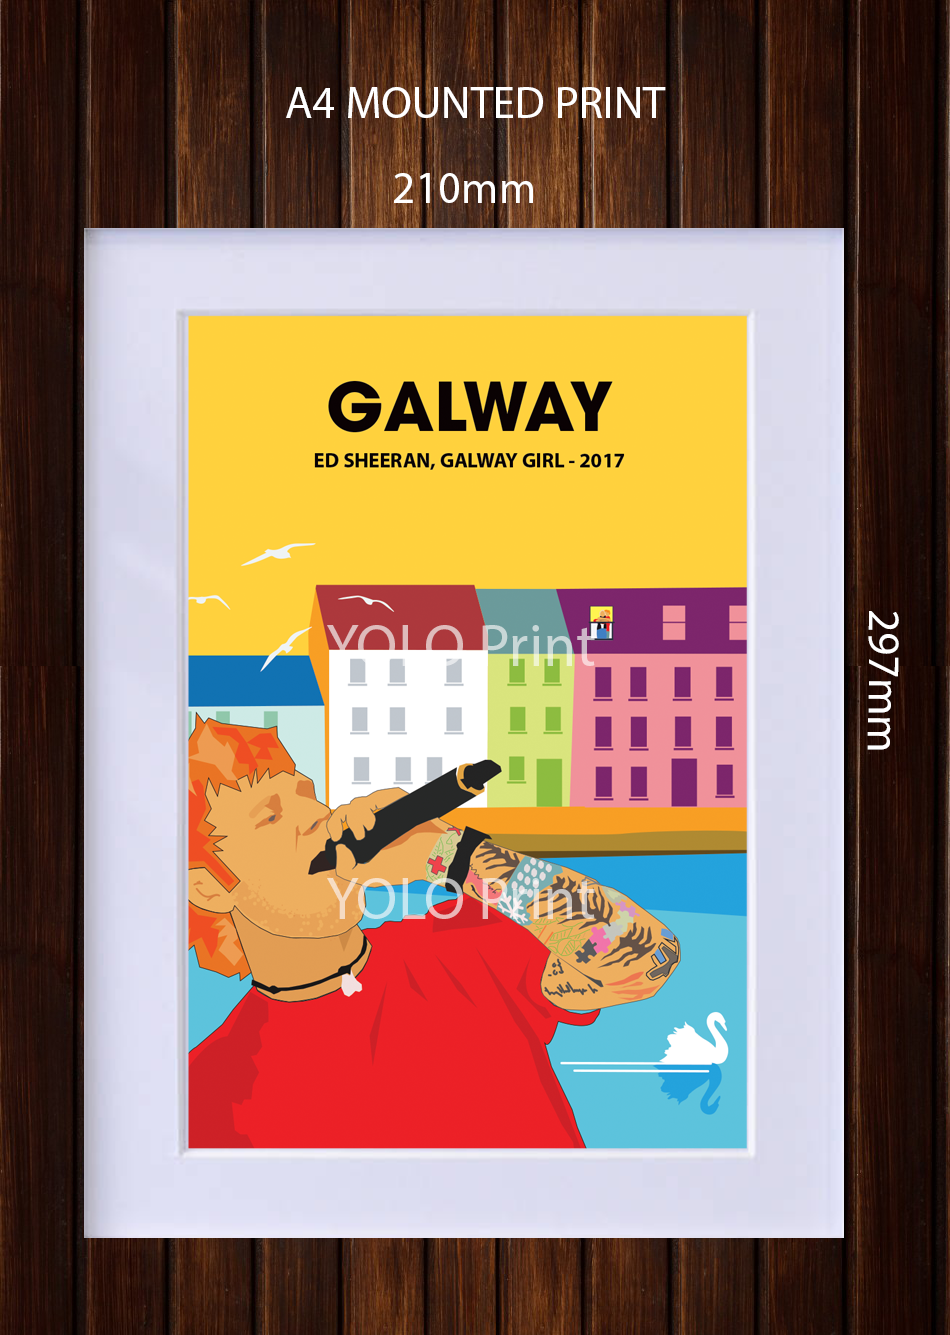 Galway Postcard or A4 Mounted Print  - Ed Sheeran, Galway Girl